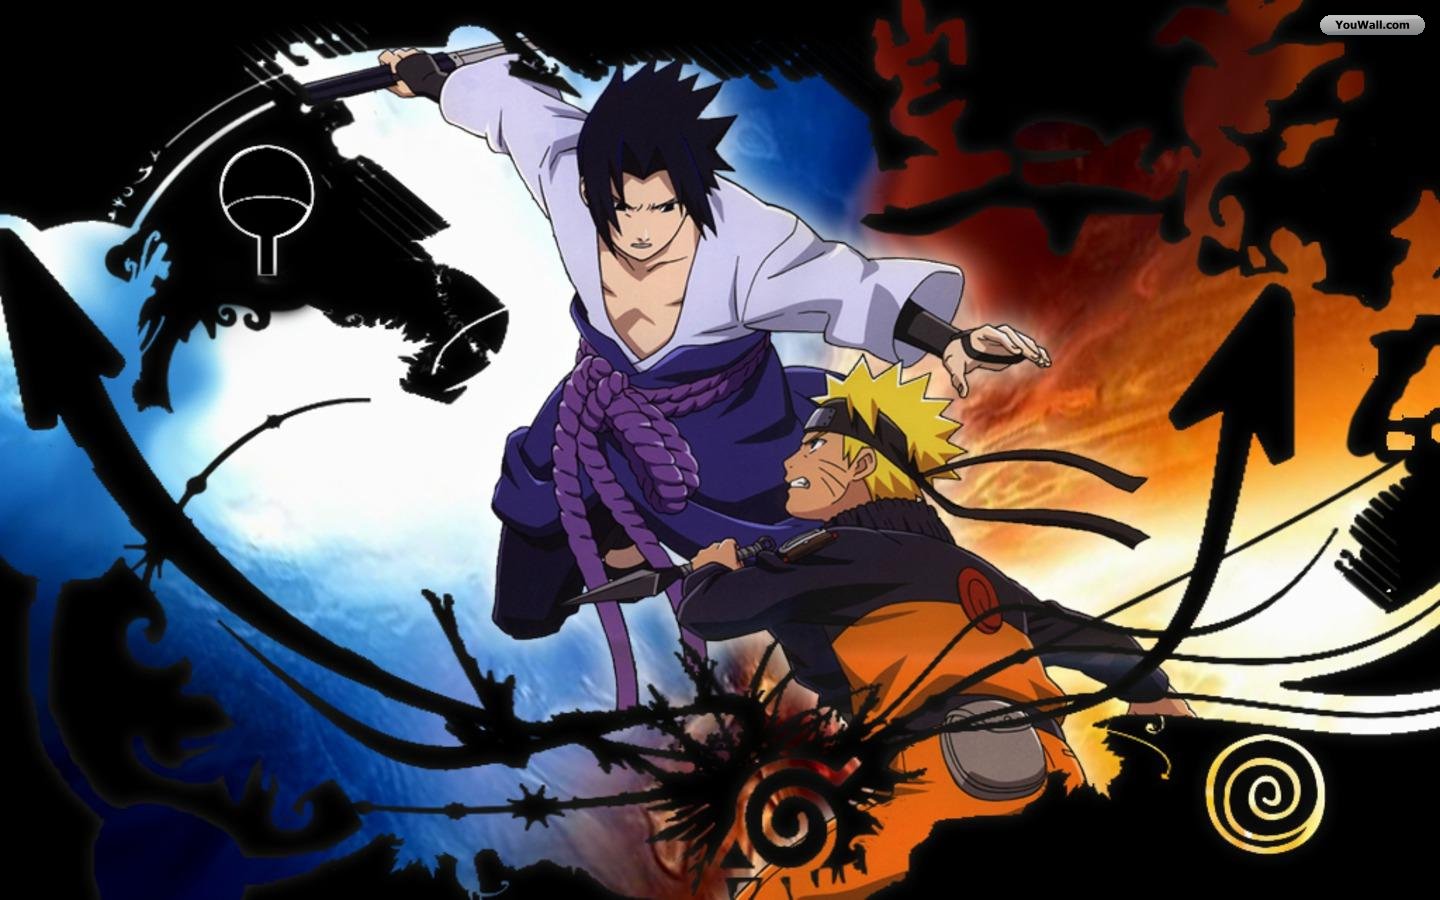 Kiba16 images Sasuke vs Naruto HD wallpaper and background